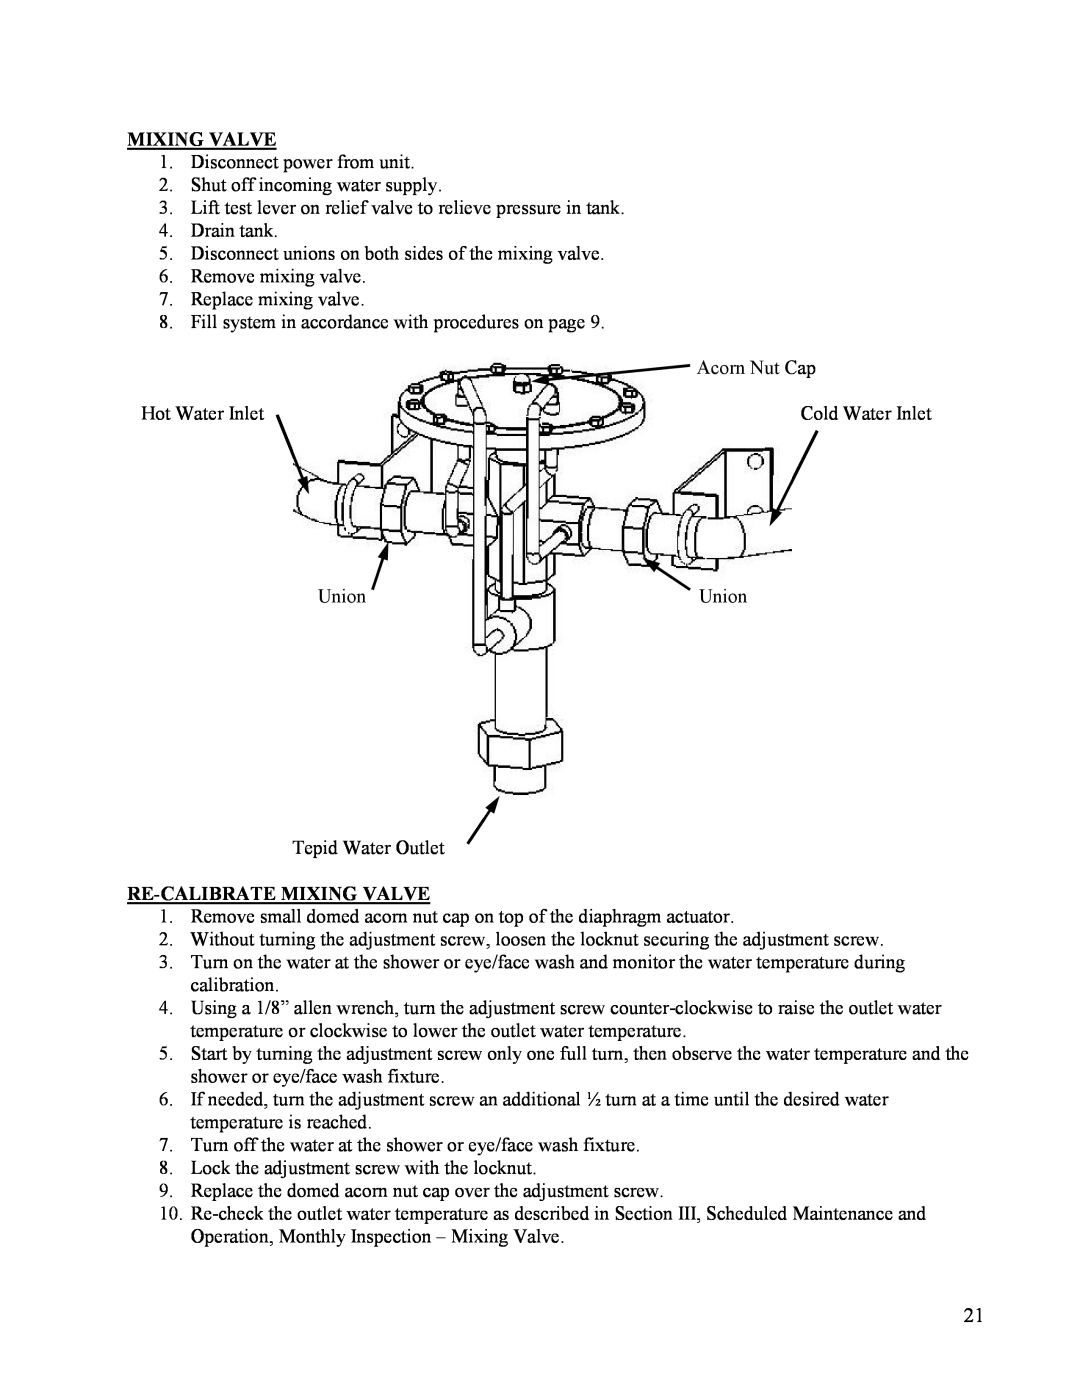 Hubbell Electric Heater Company EMV manual Mixing Valve, Re-Calibratemixing Valve 